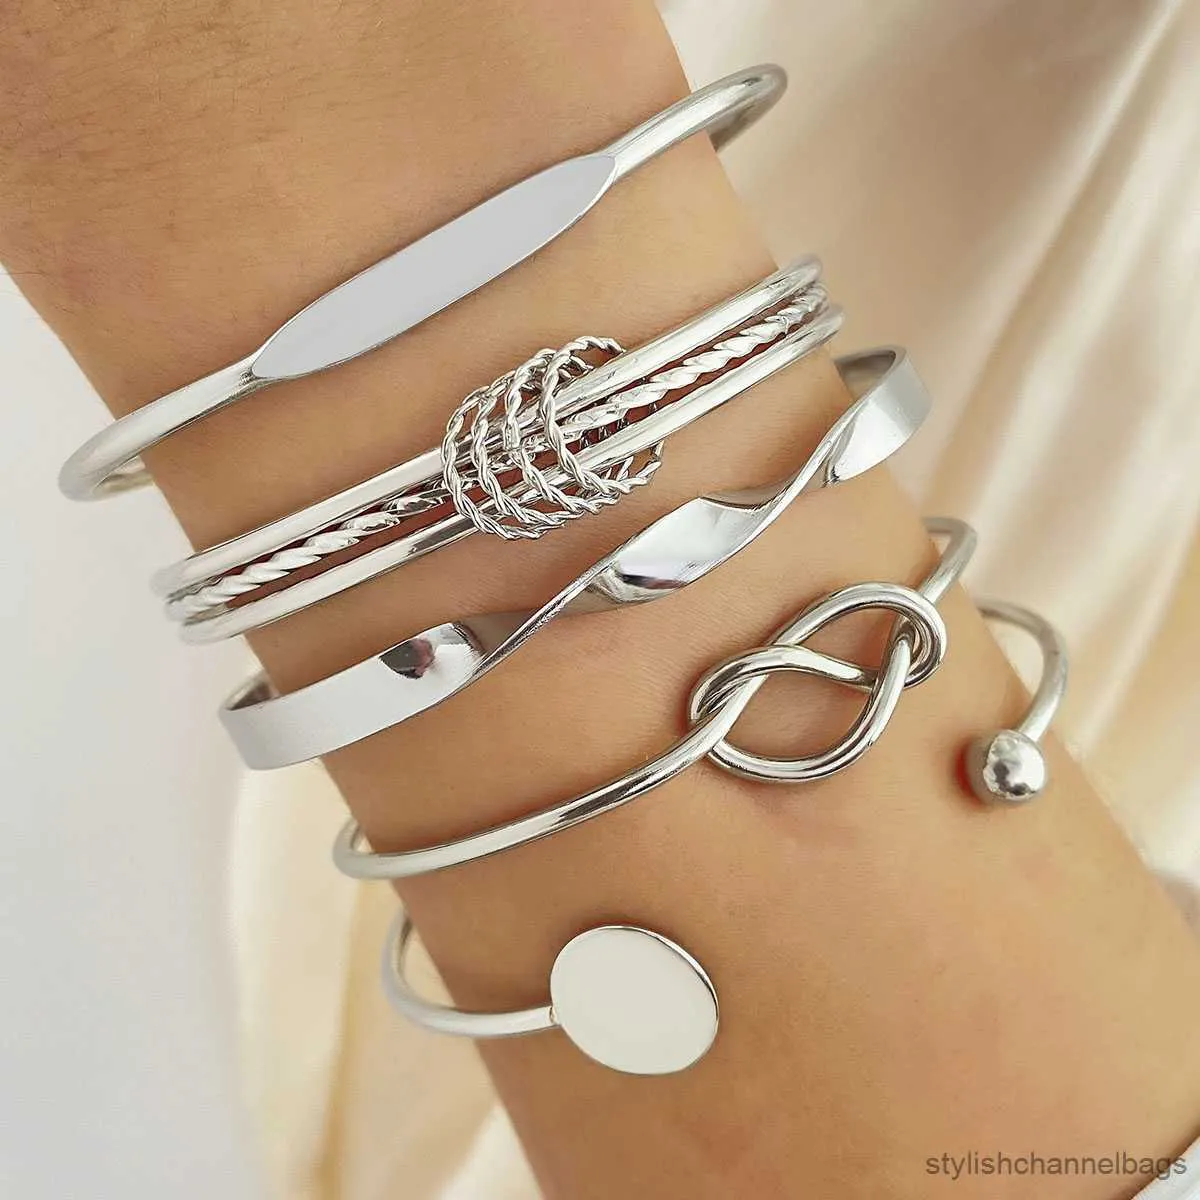 Buy P.N. GADGIL & SONS Silver Metal Bracelet With Light Blue Gemstone |  Inspirational Gifting Bracelet for Women/Girls at Amazon.in